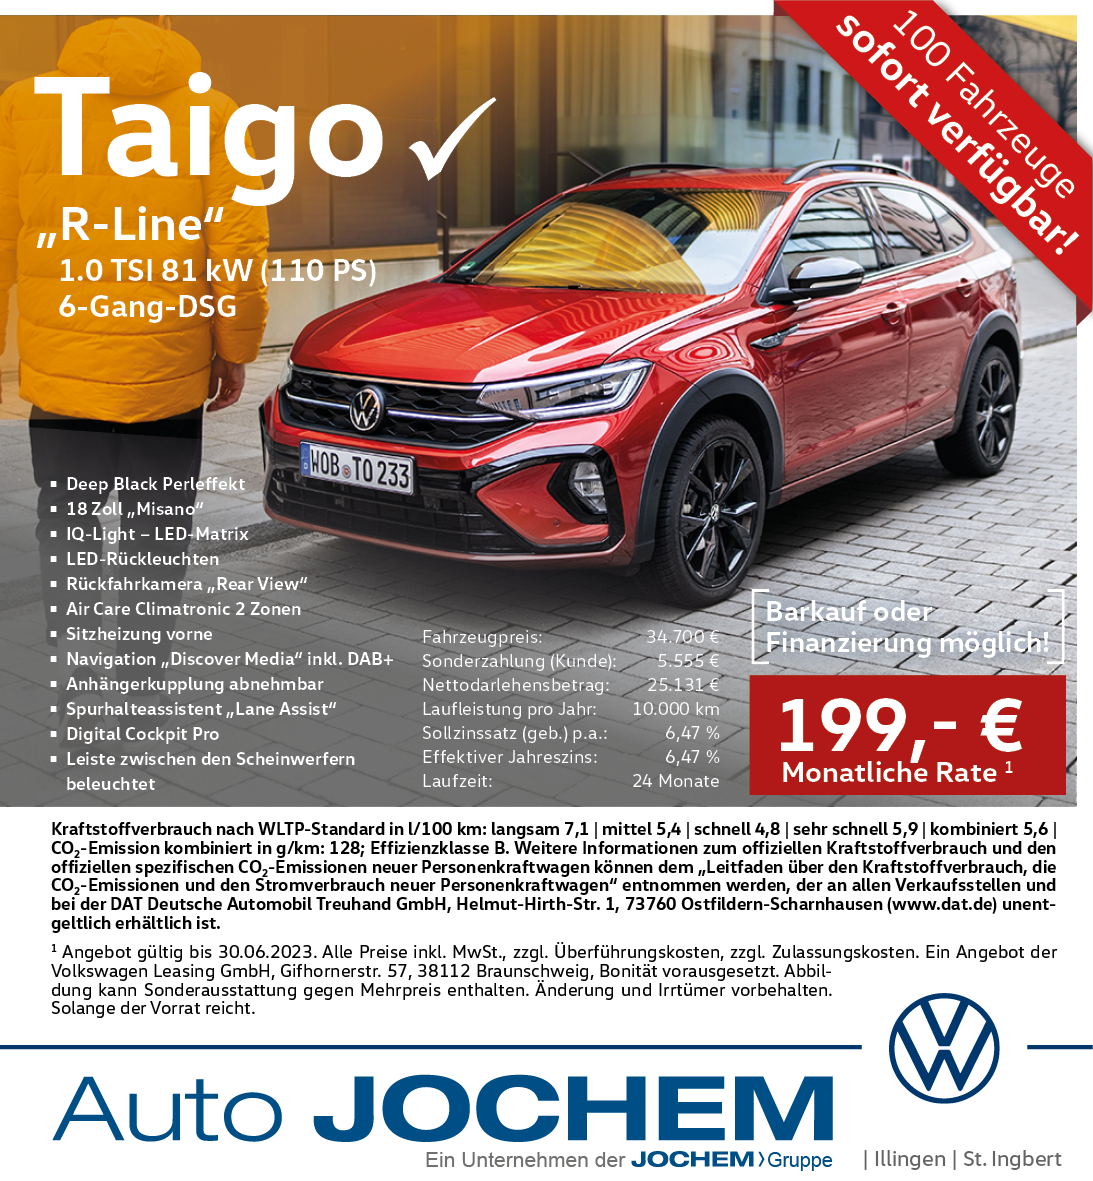 Volkswagen Taigo | Auto-Jochem GmbH | Illingen | St. Ingbert